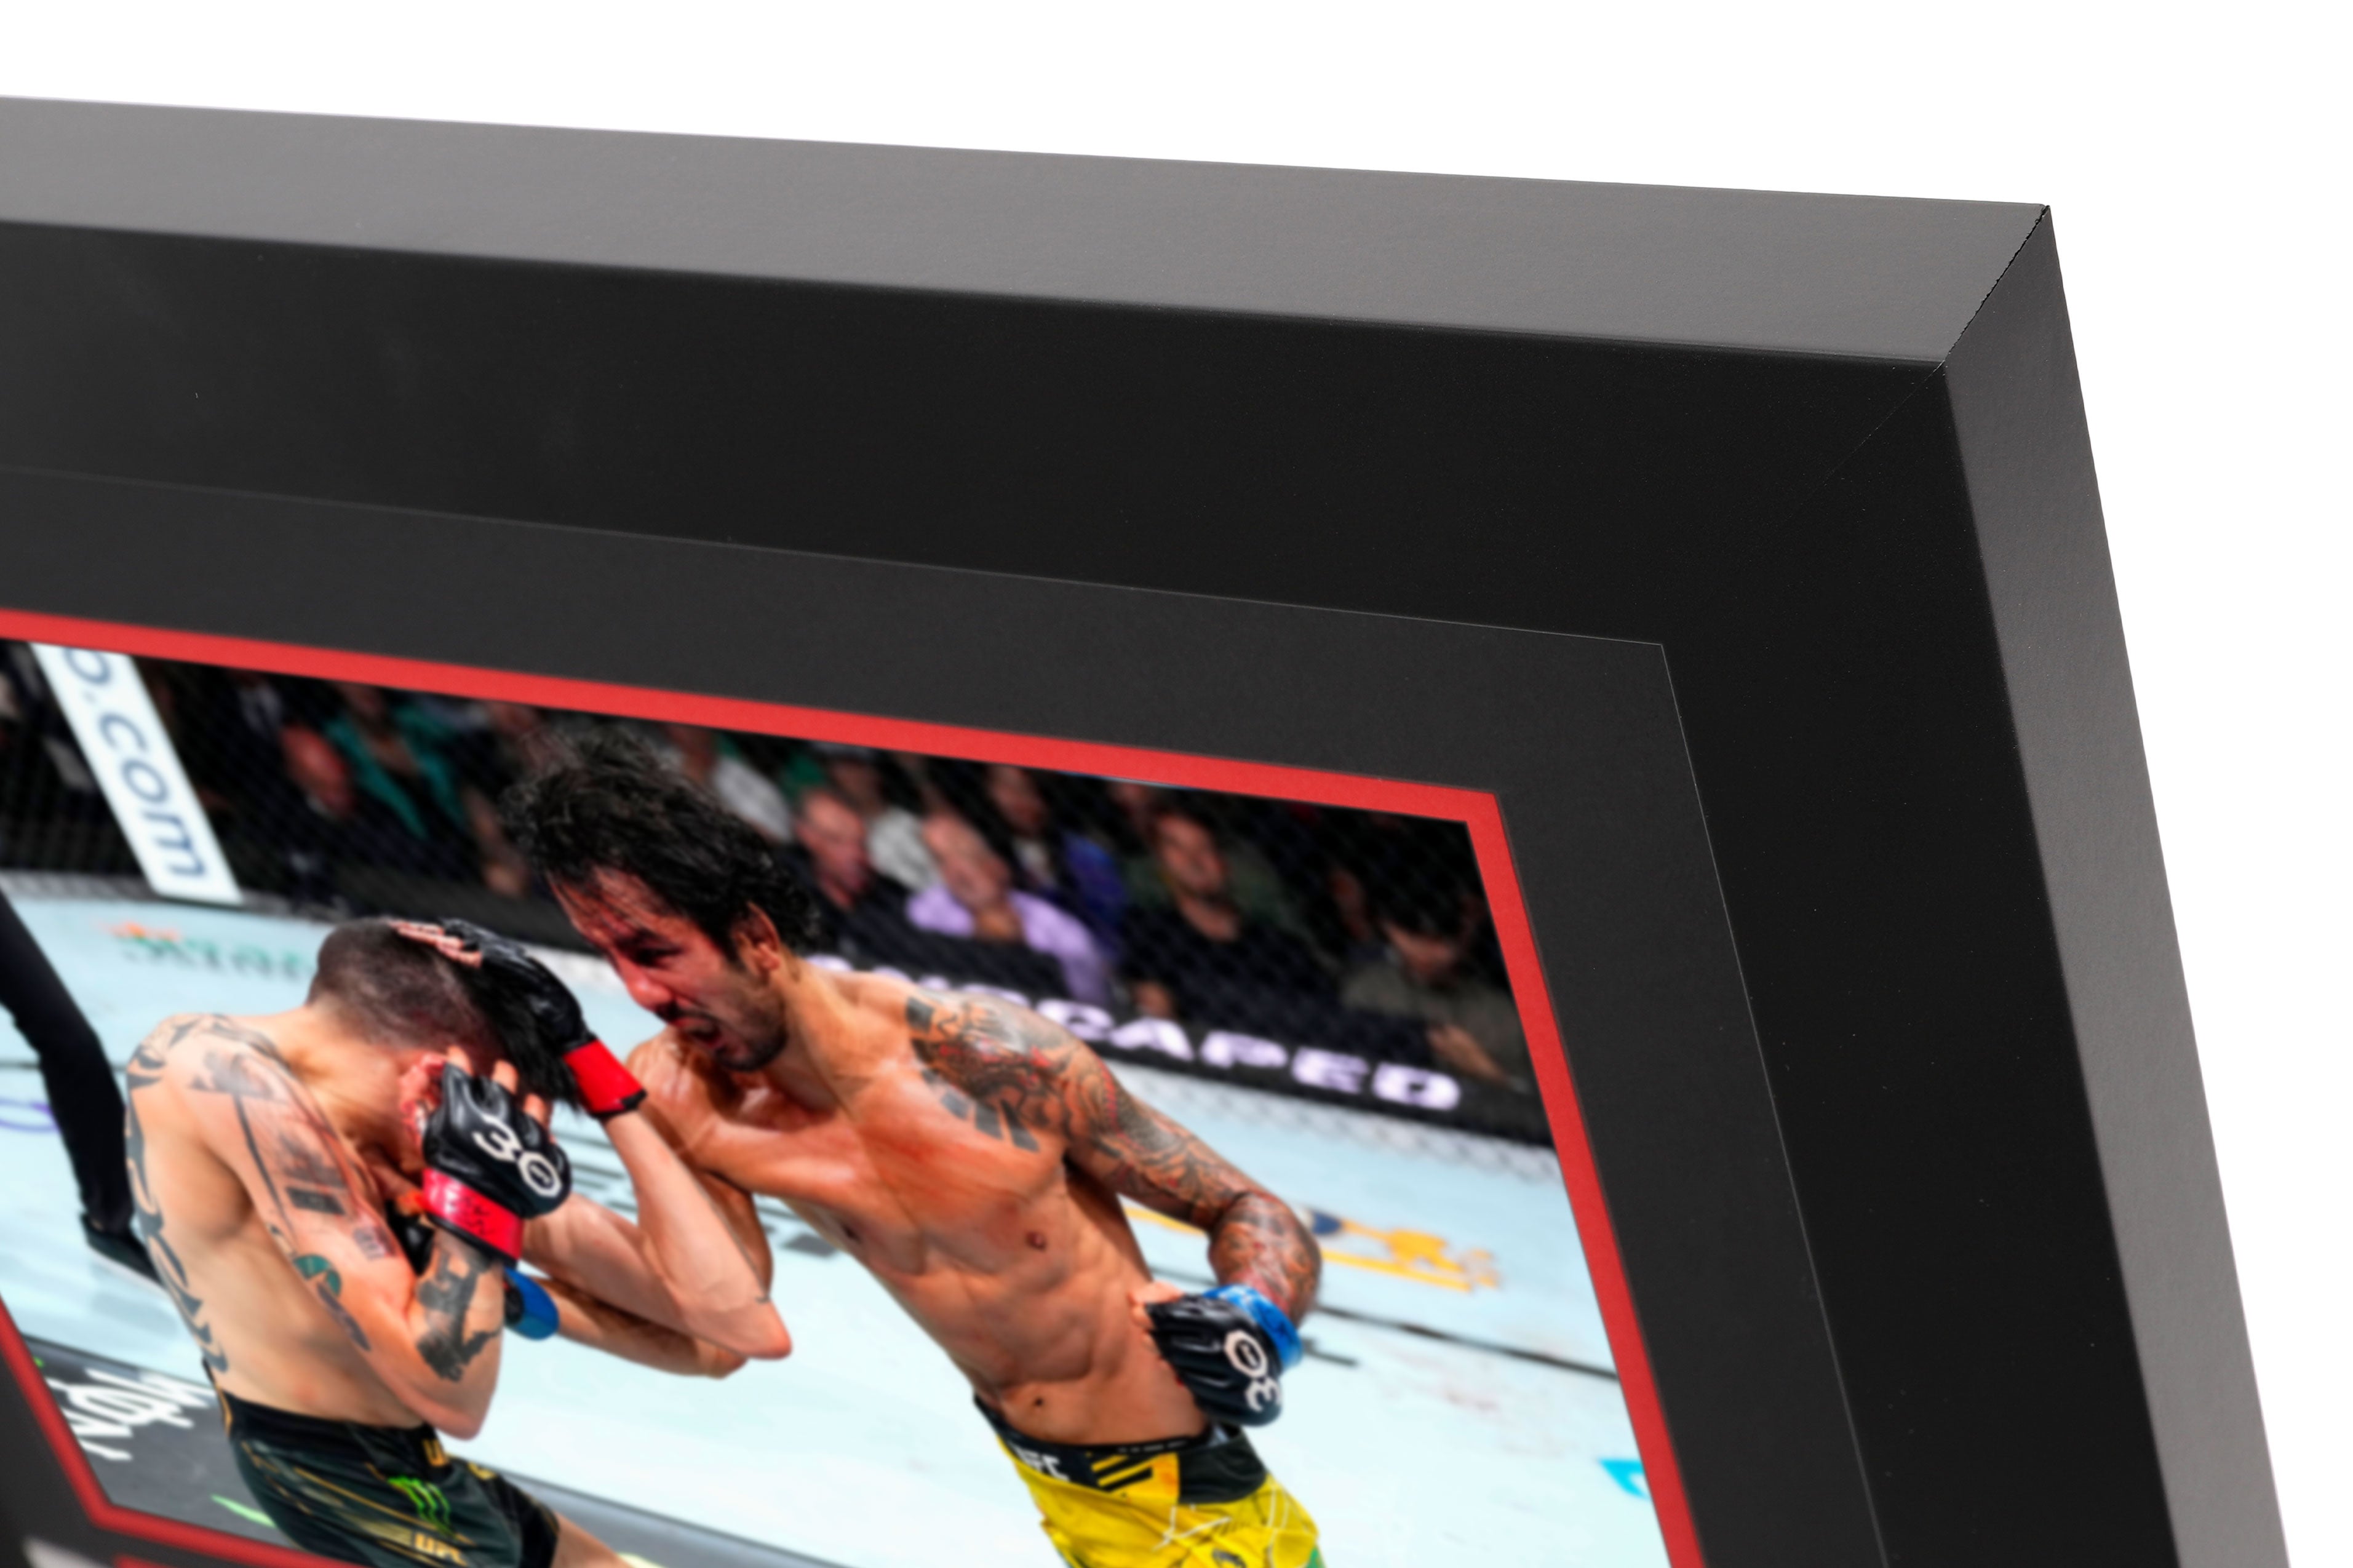 UFC 290: Moreno vs Pantoja Canvas & Photo